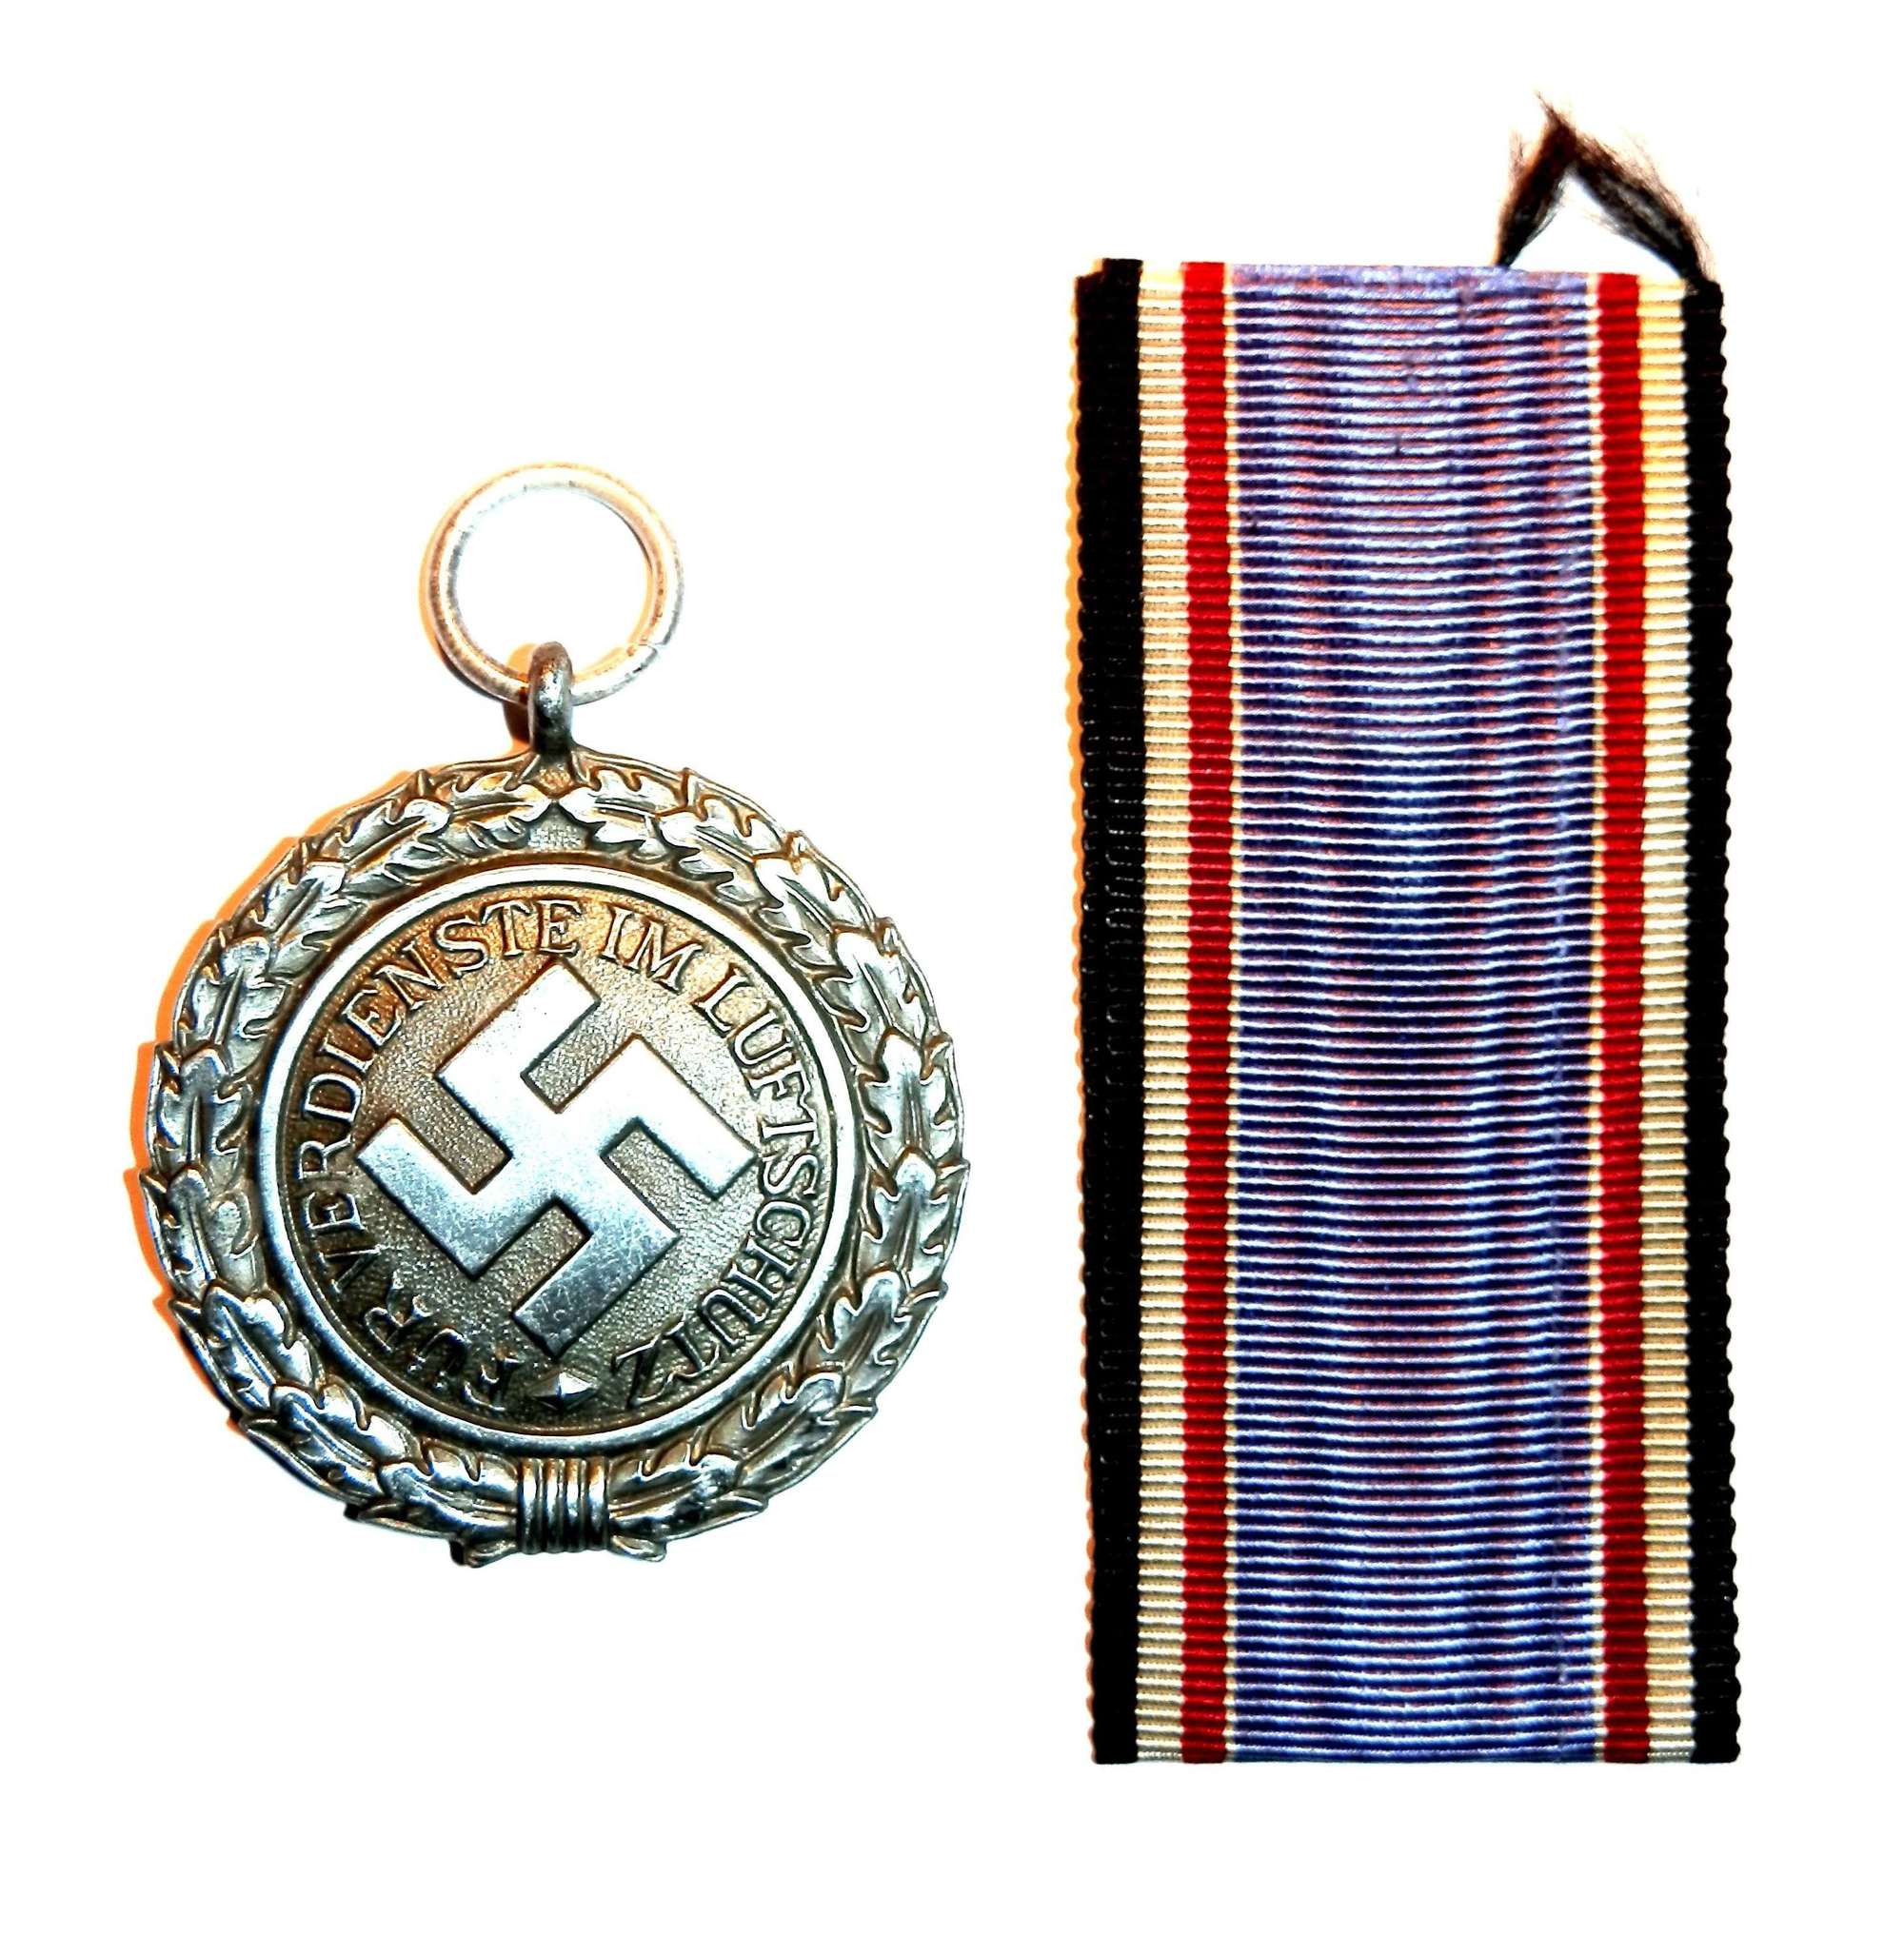 German Air Raid Warden 2nd Level Medal.